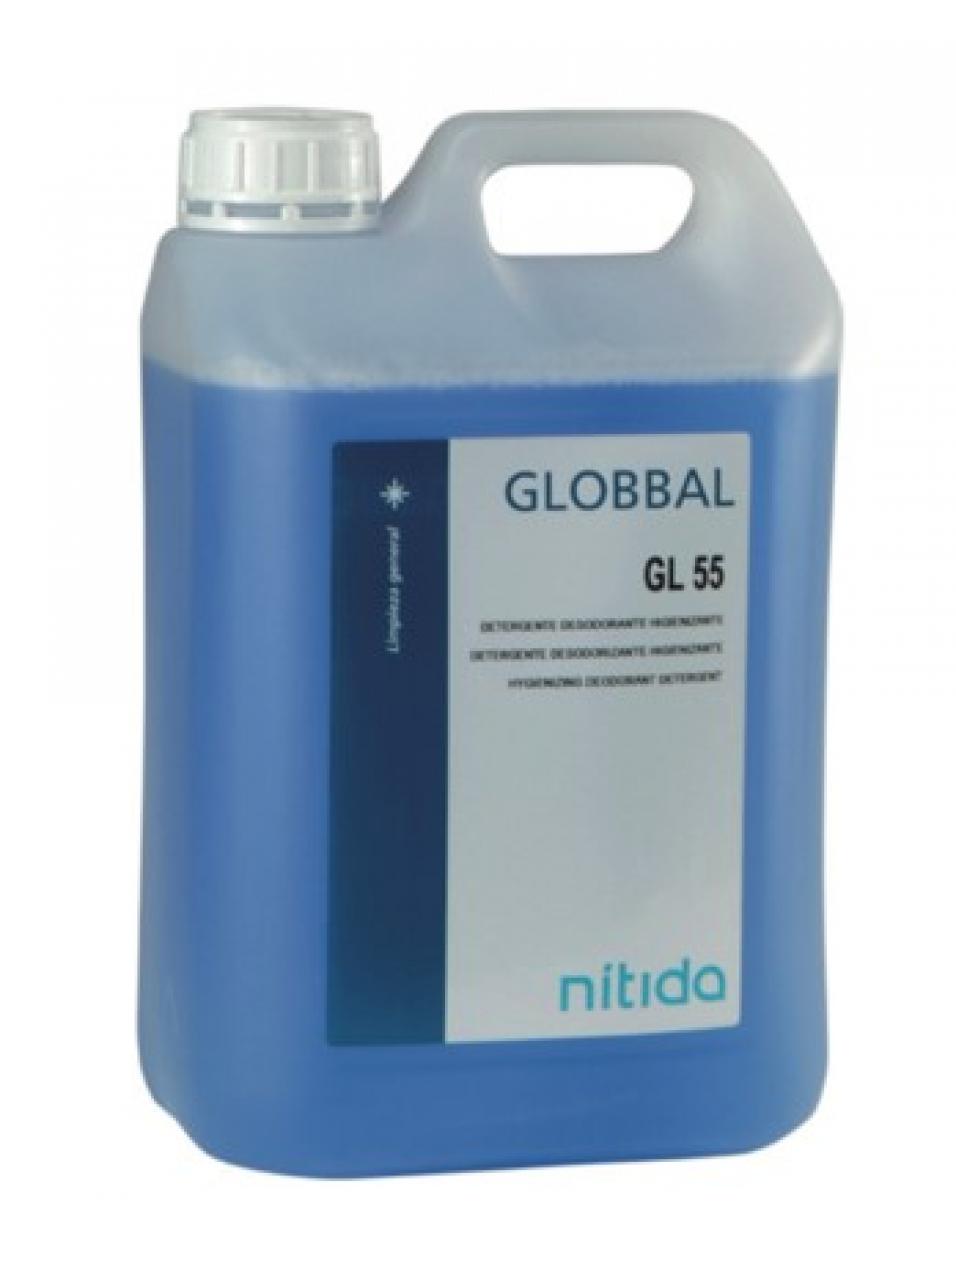 Desinfectante detergente desodorizante GLOBBAL GL 55.